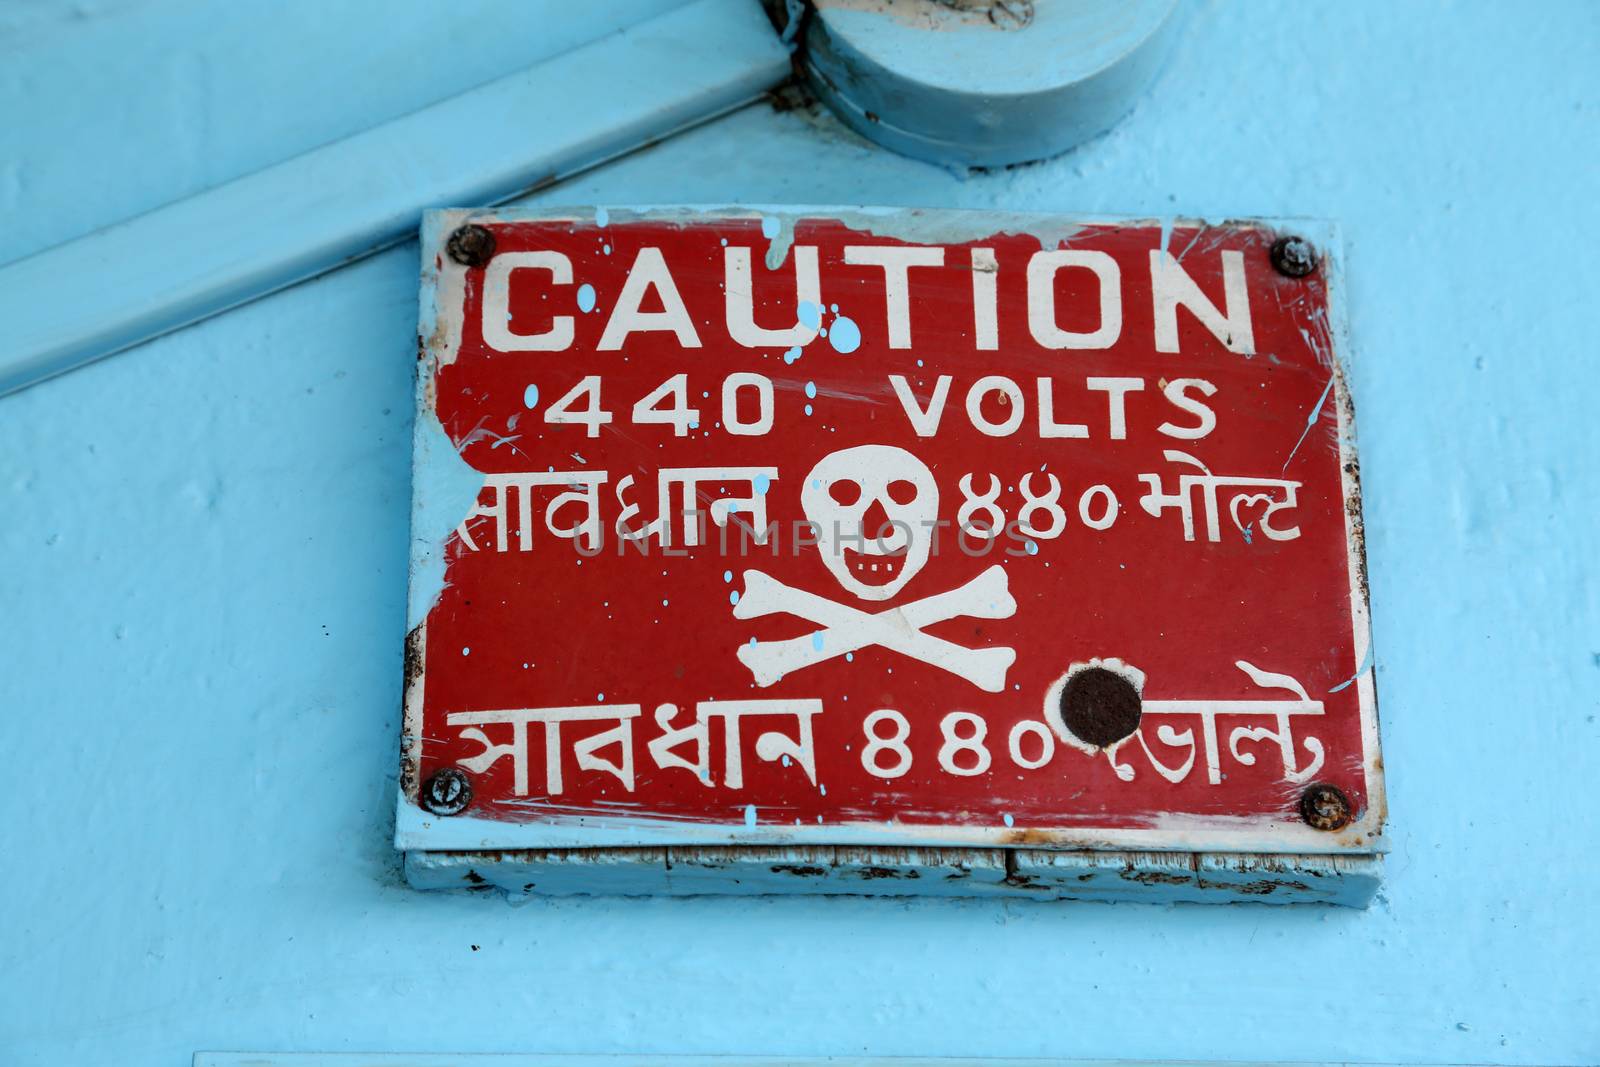 Danger warning sign by atlas